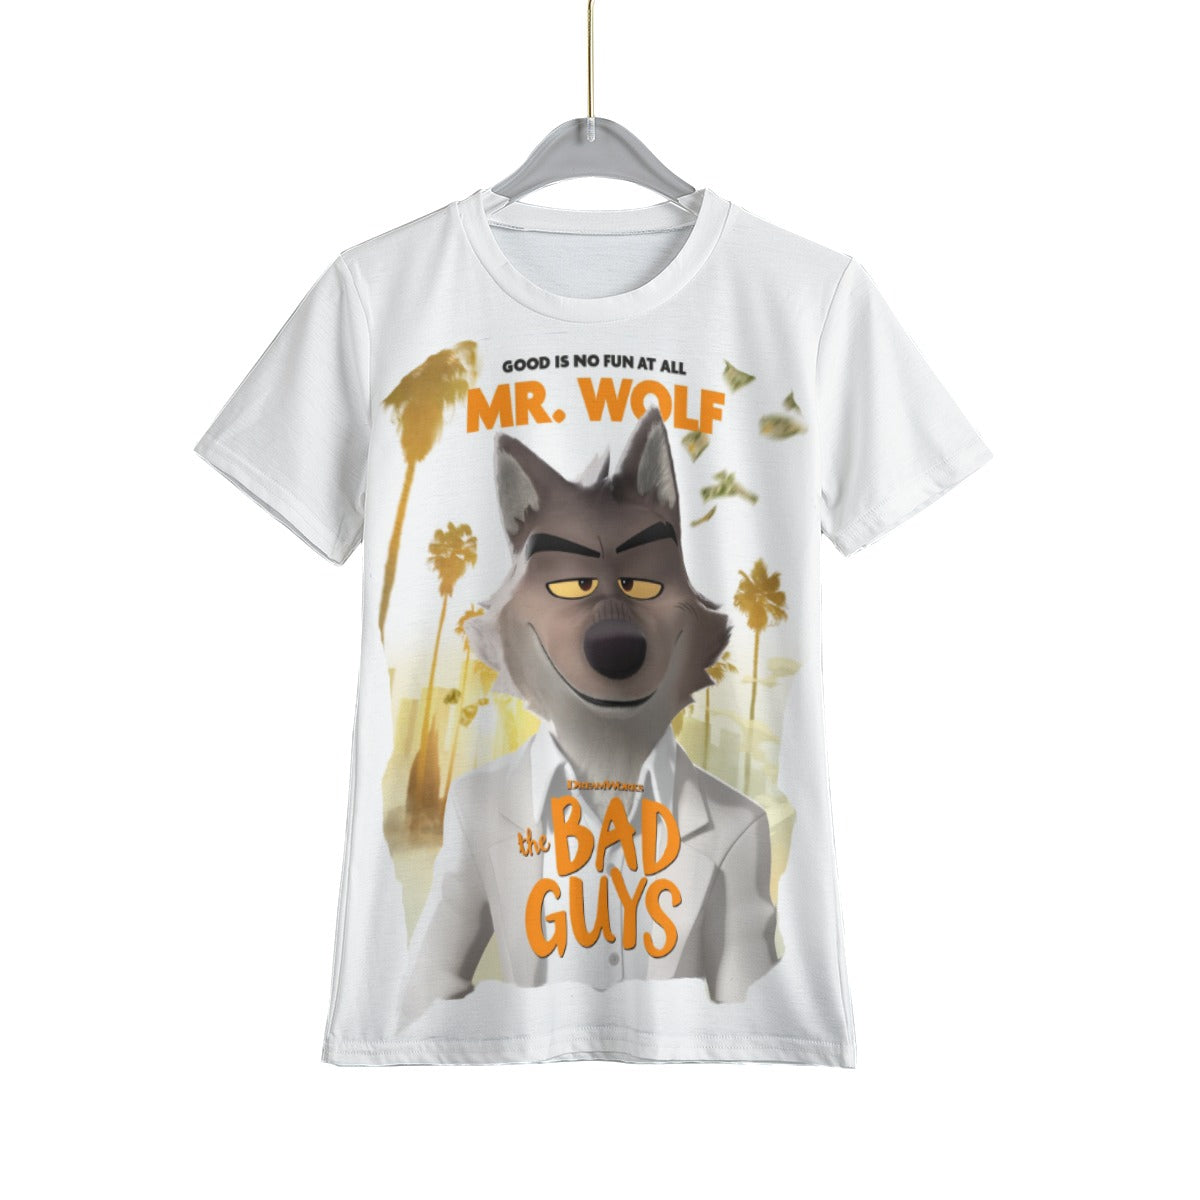 The Bad Guys | Kid's Short Sleeve T-Shirts